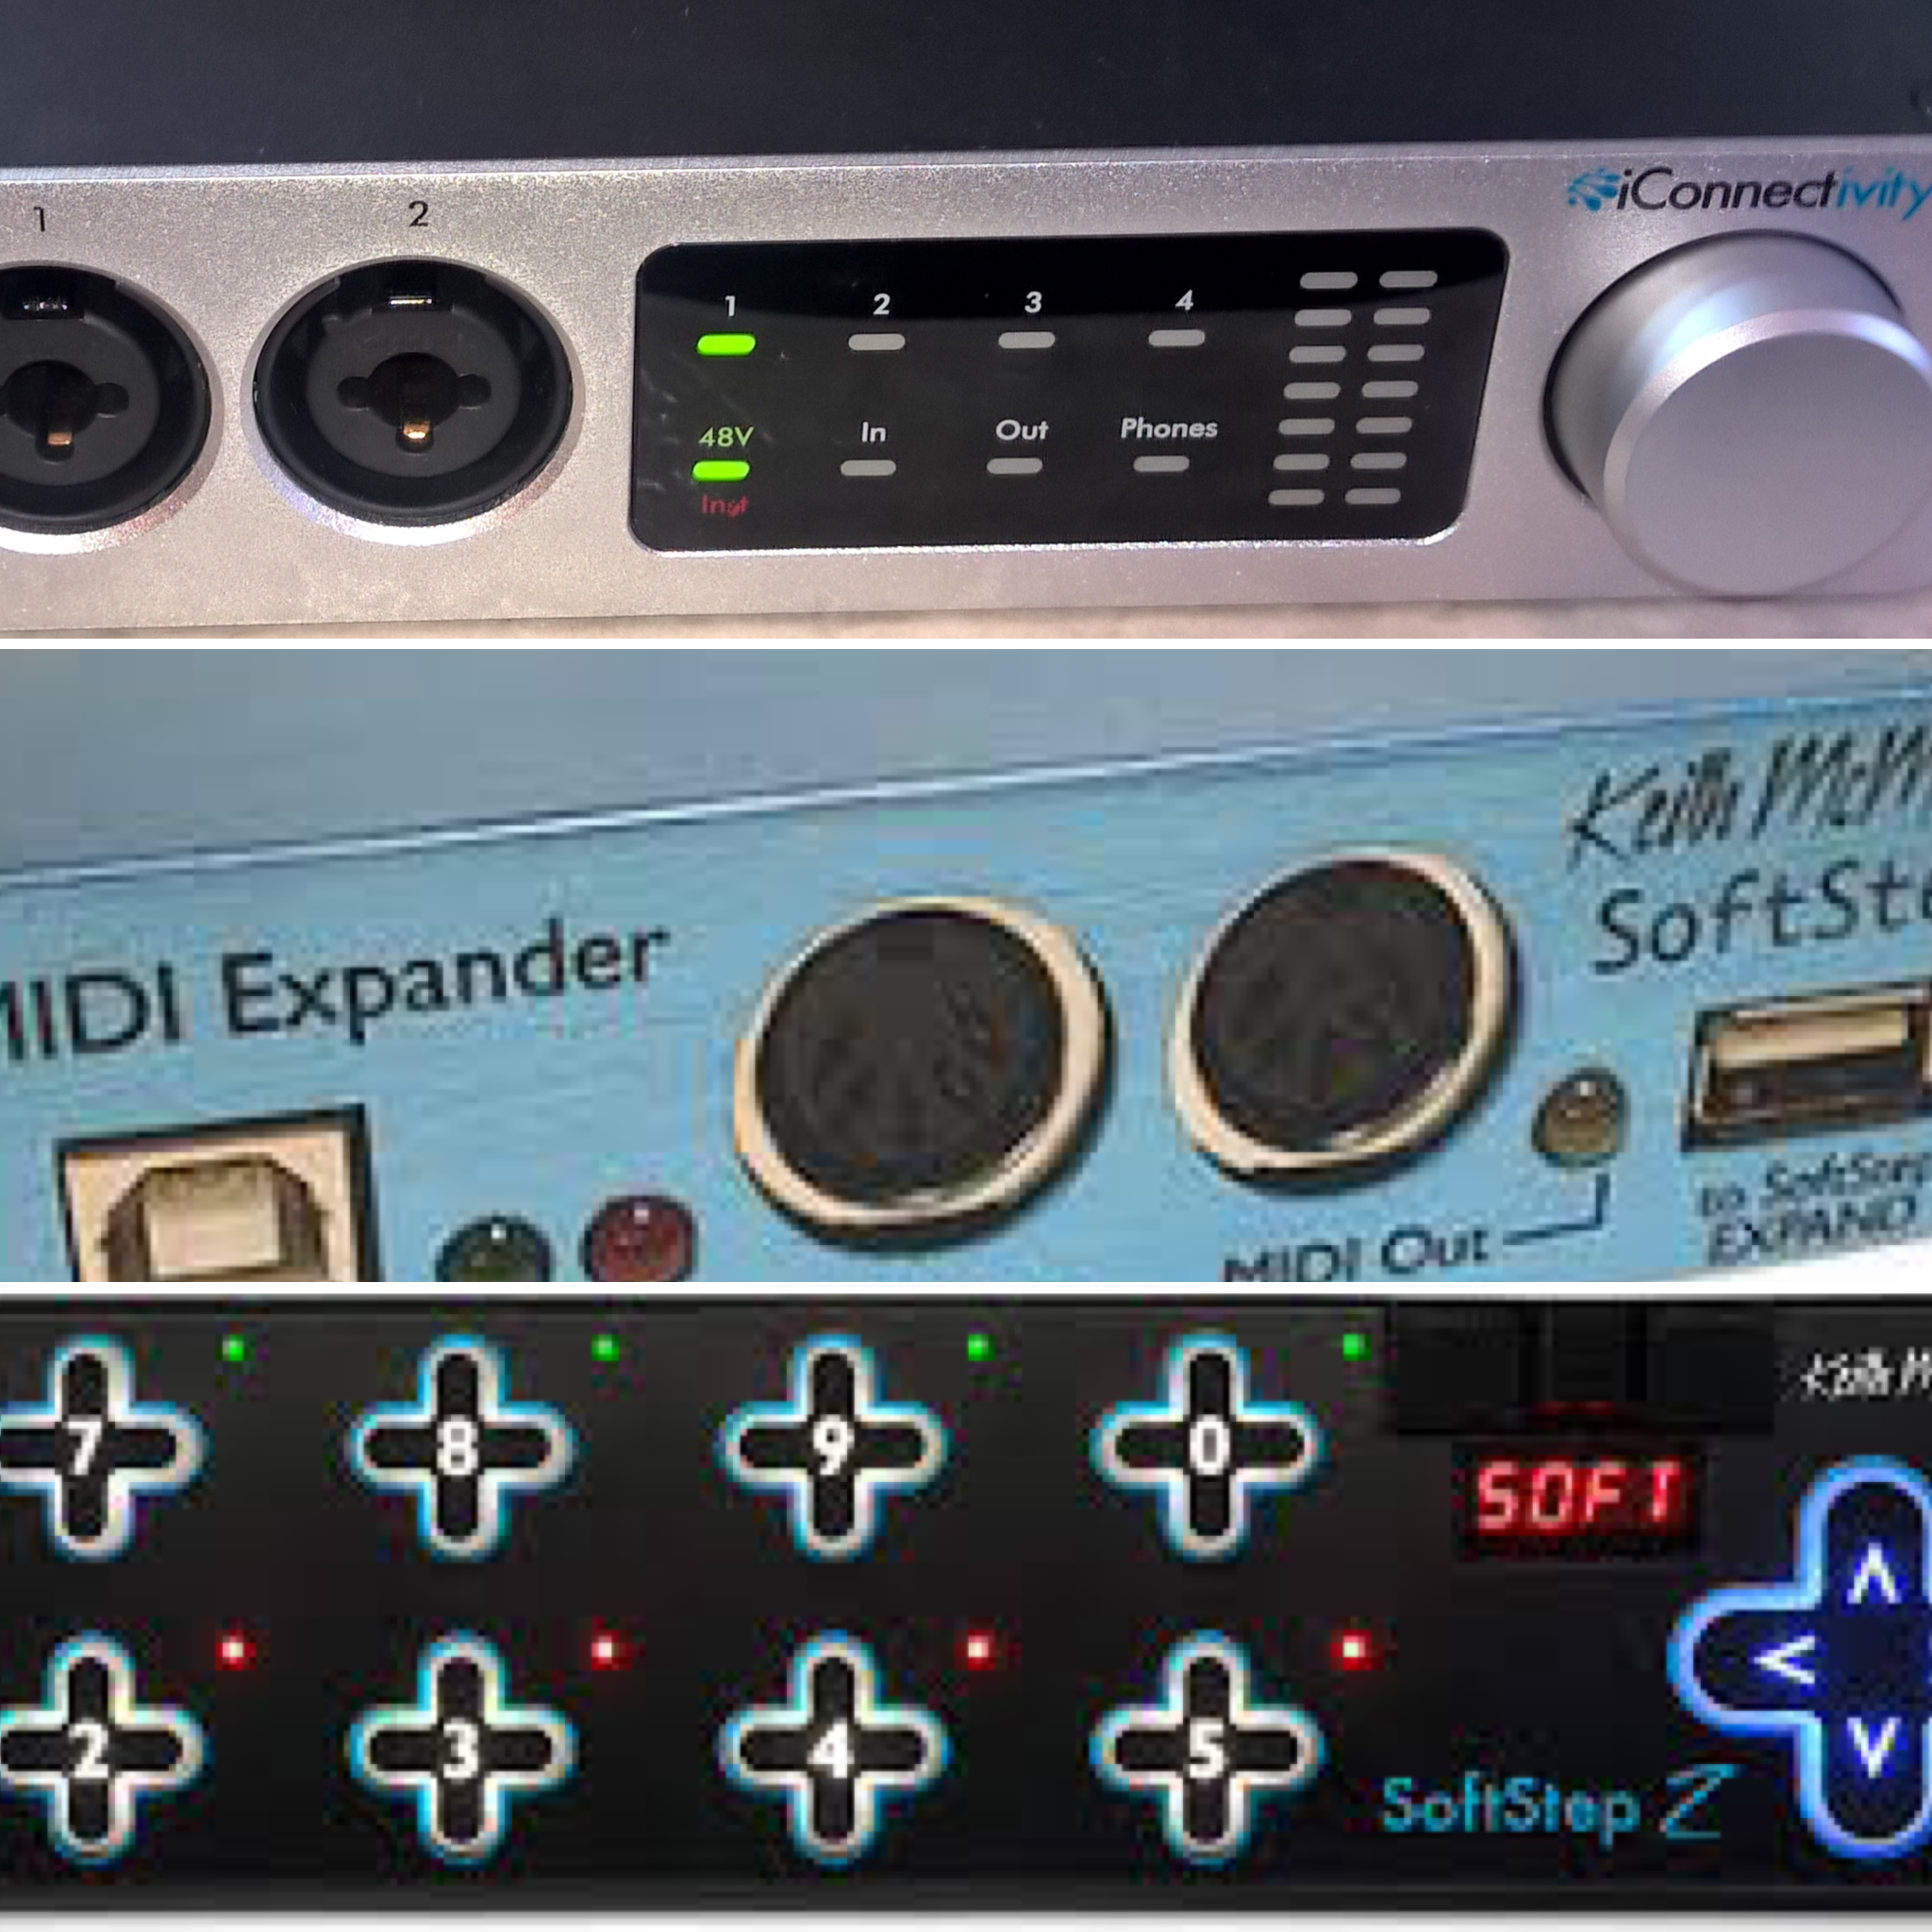 HDSmusic Zubehör: iConnect, MIDI Expander, KeitMCmillen-Pedal